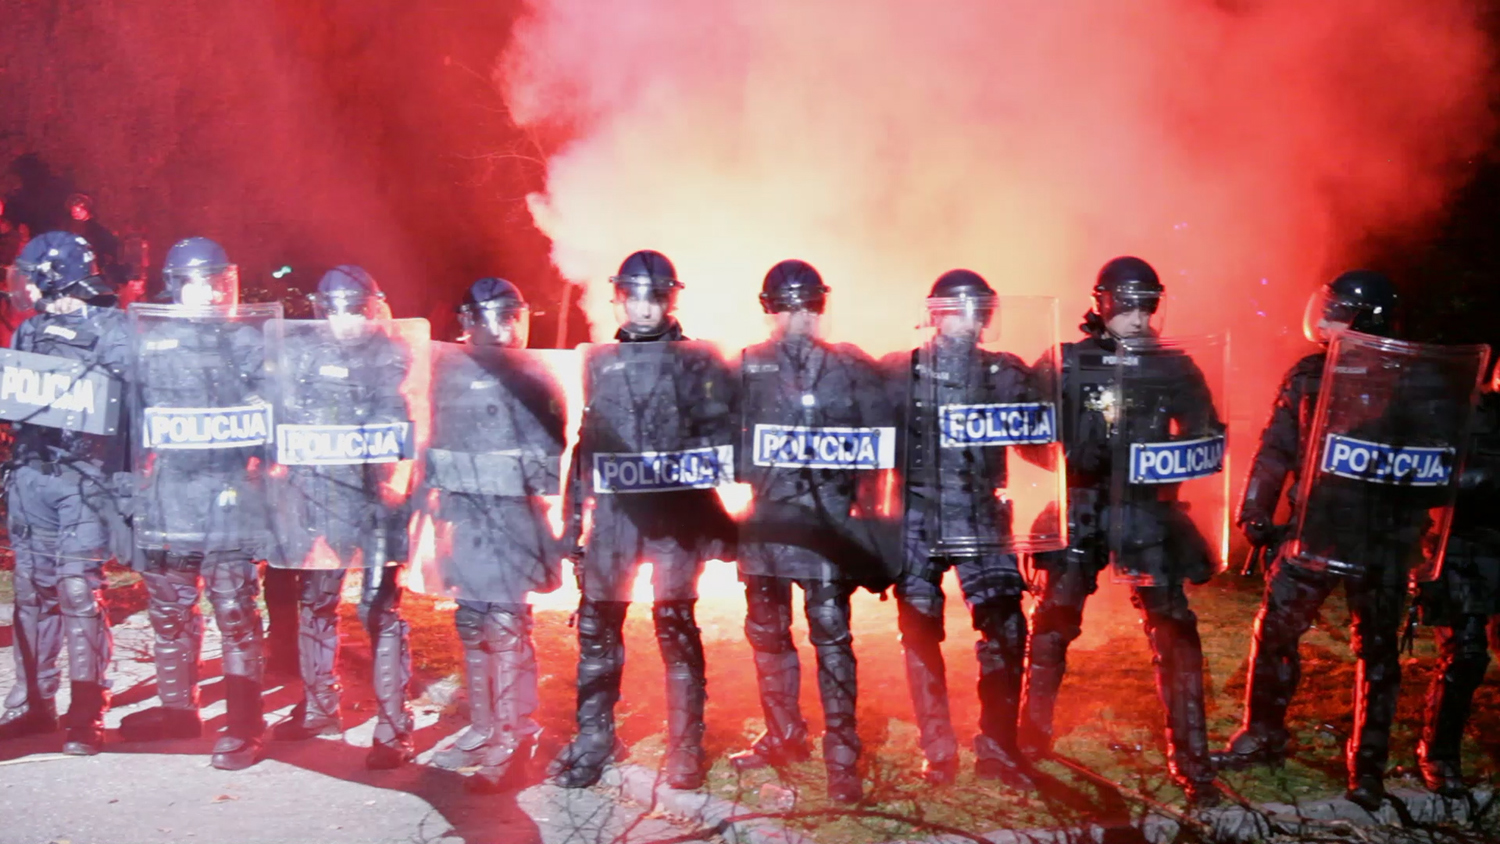 The Maribor Uprisings: A Live Participatory Film